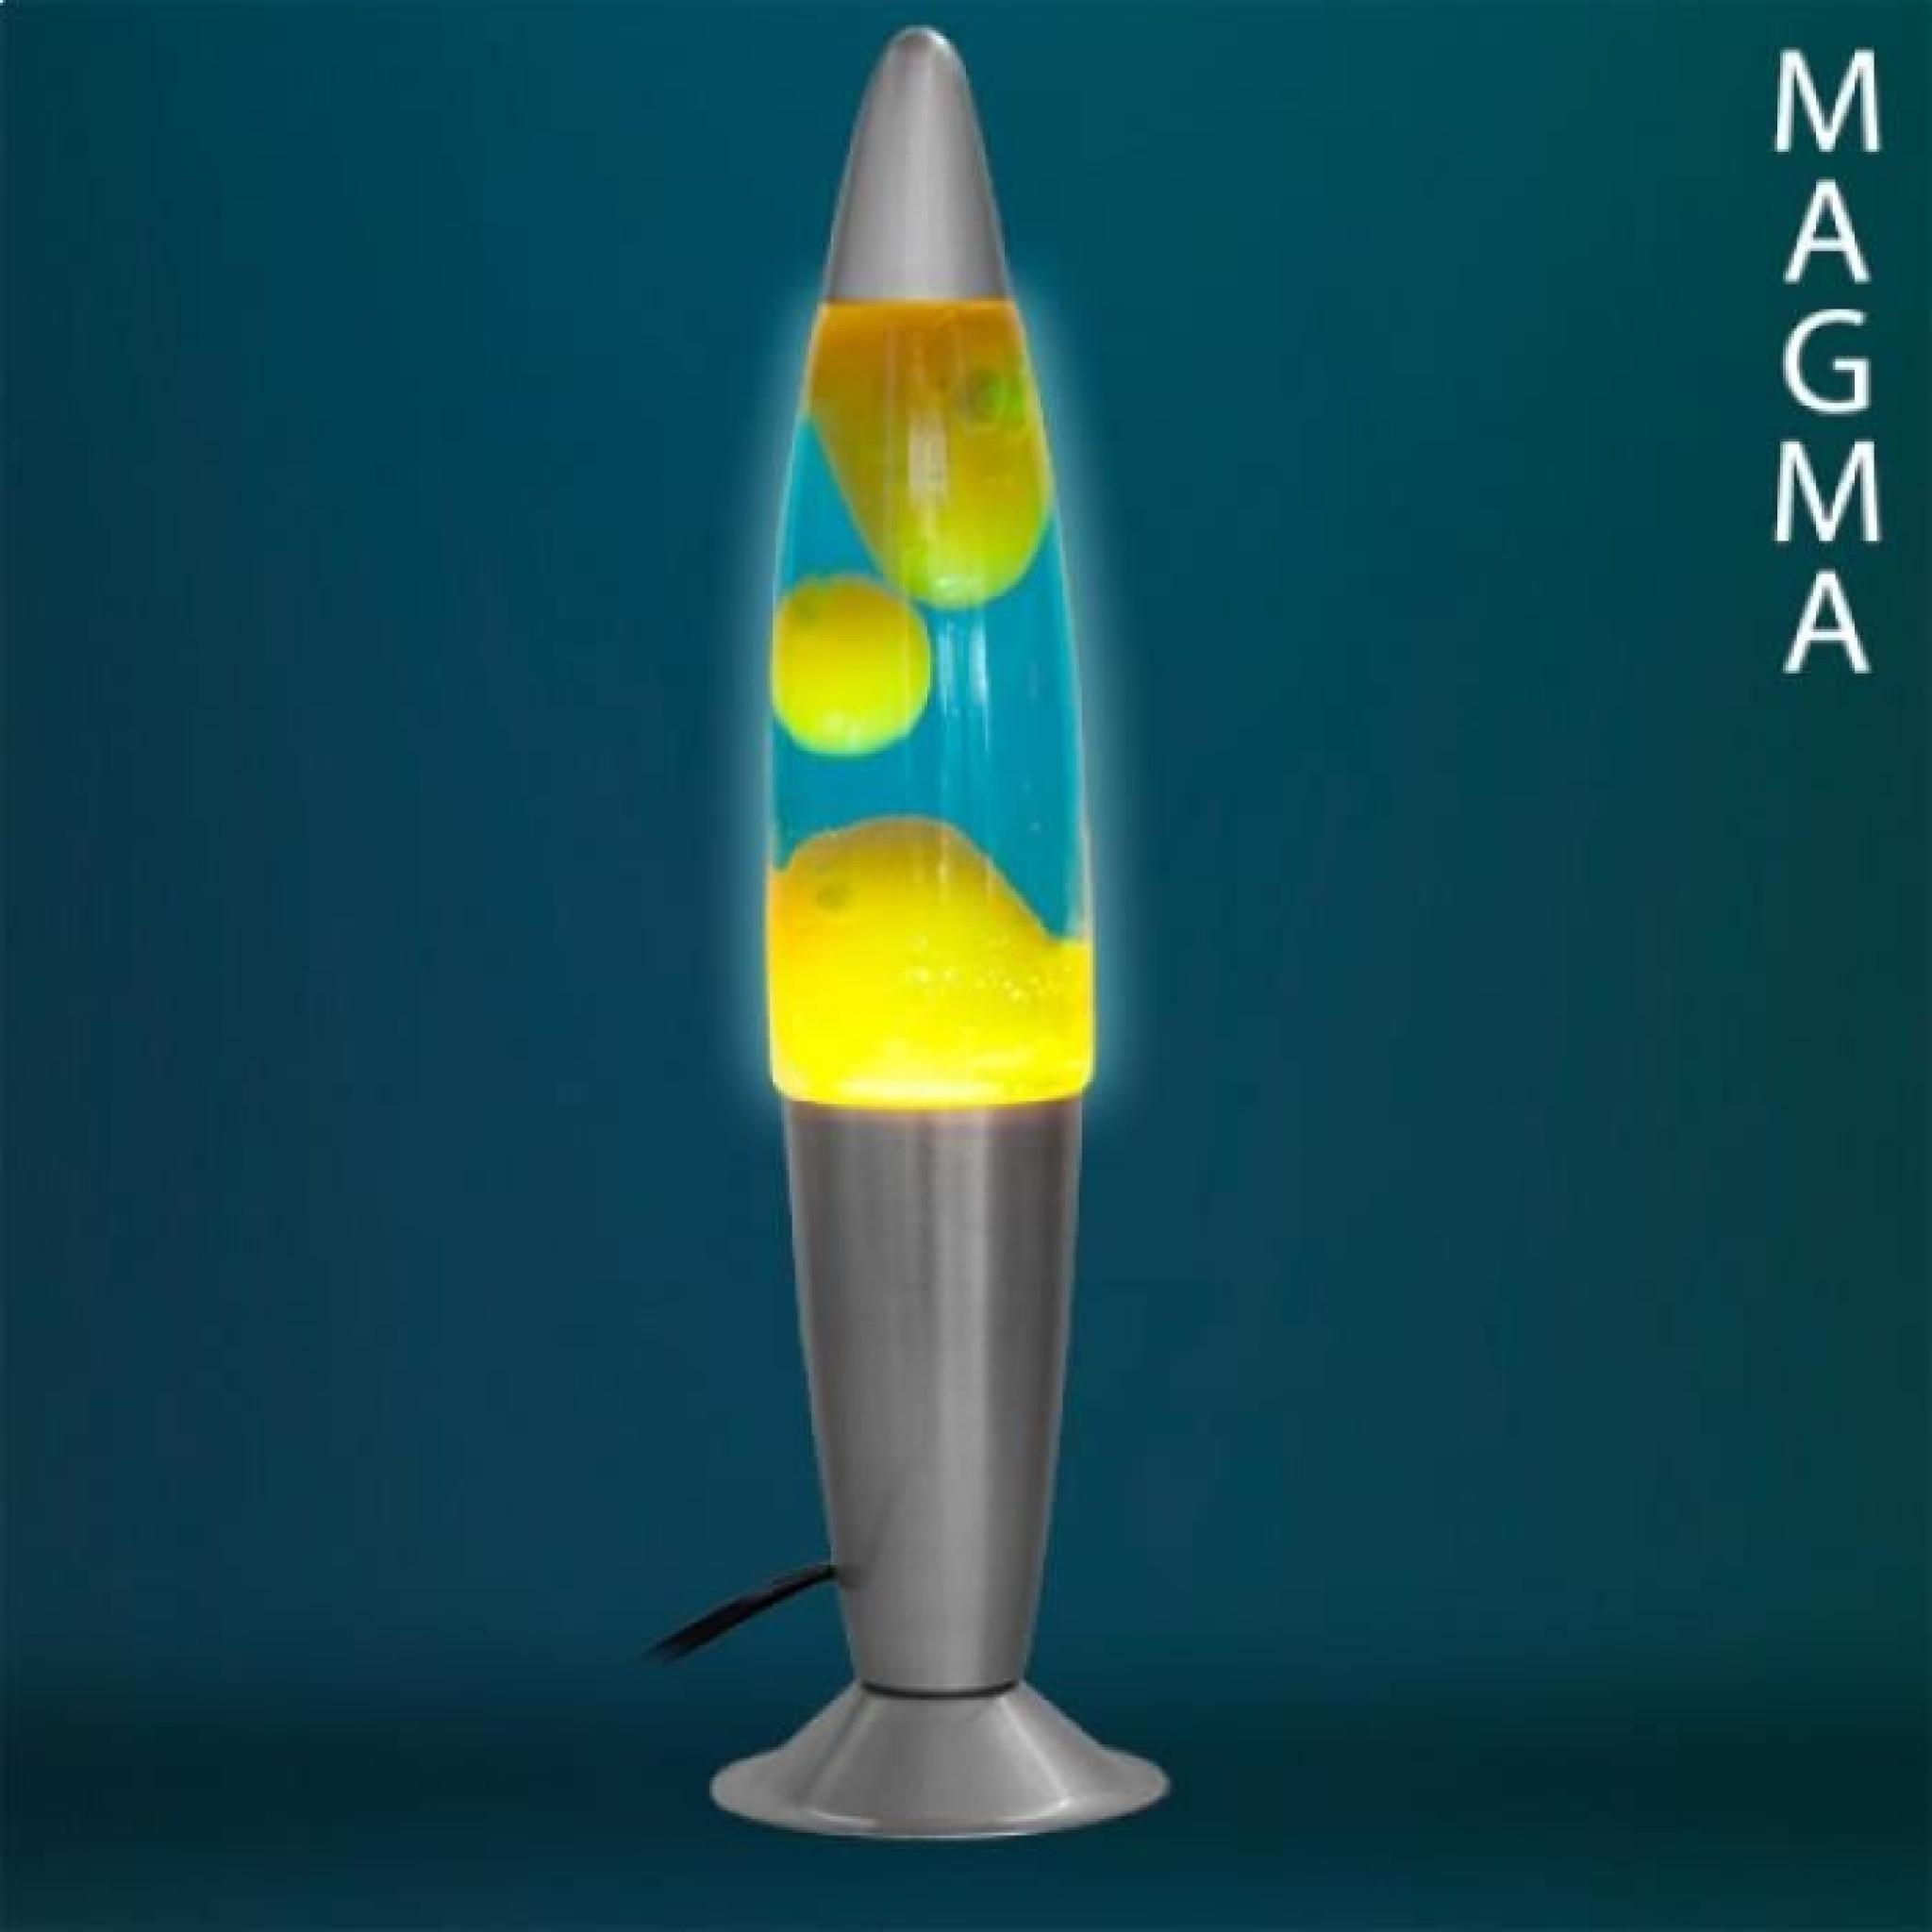 Lampe à Lave Magma fusée vert